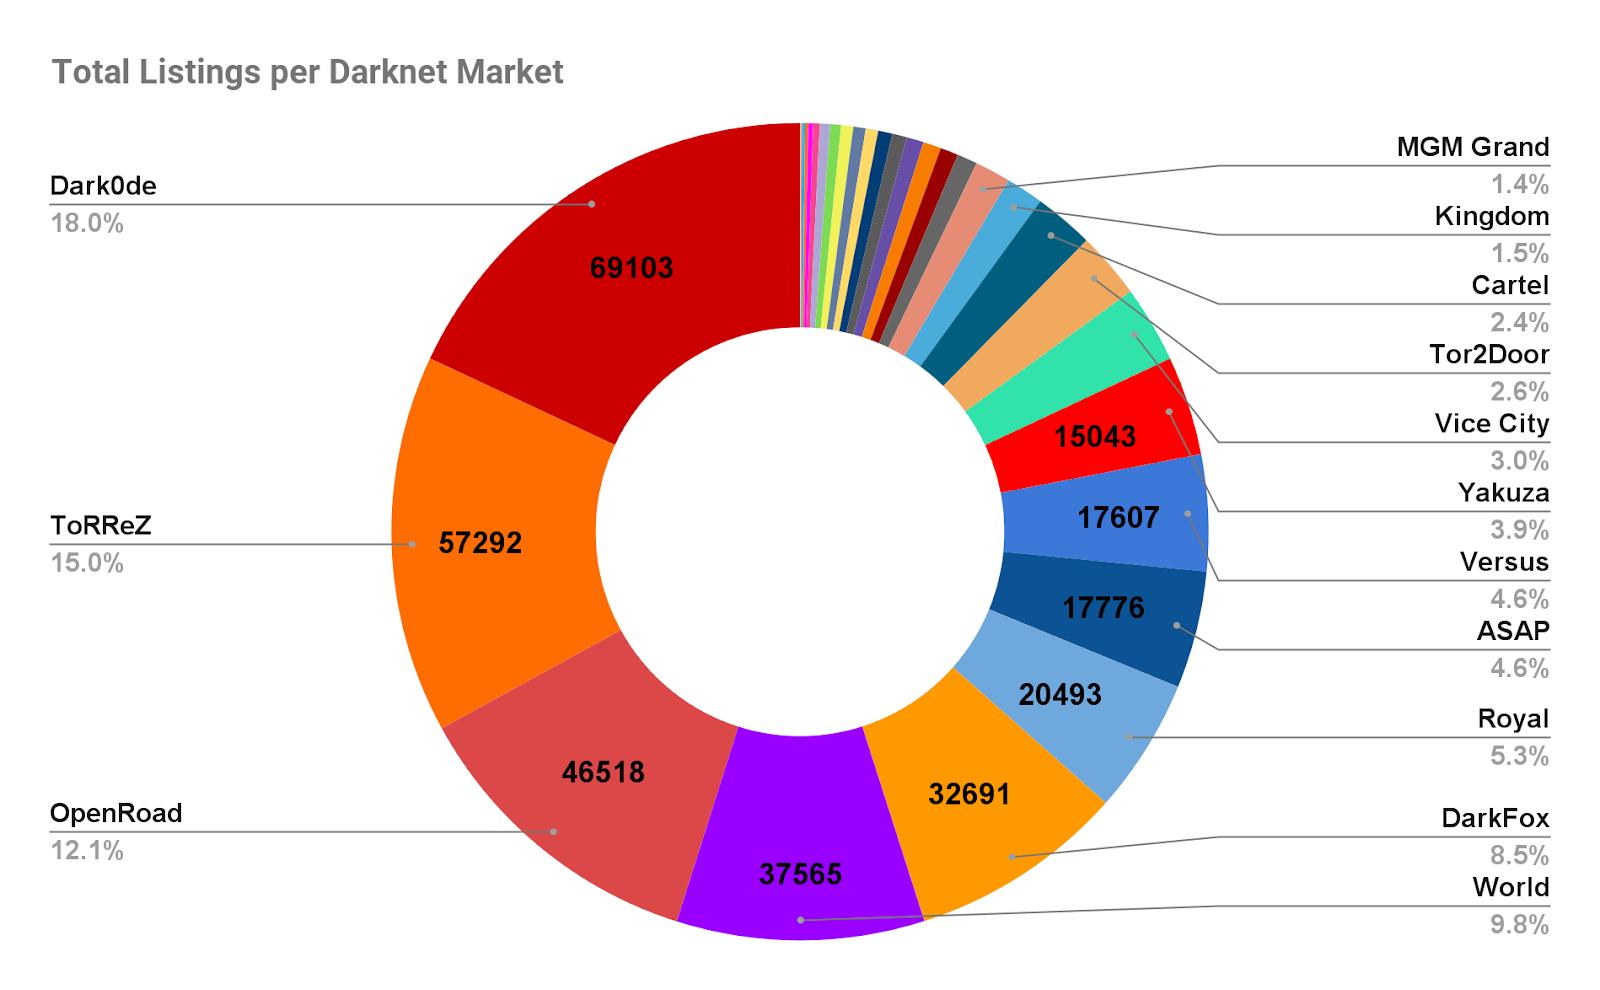 Dark0de : leader du marché du darknet en 2021